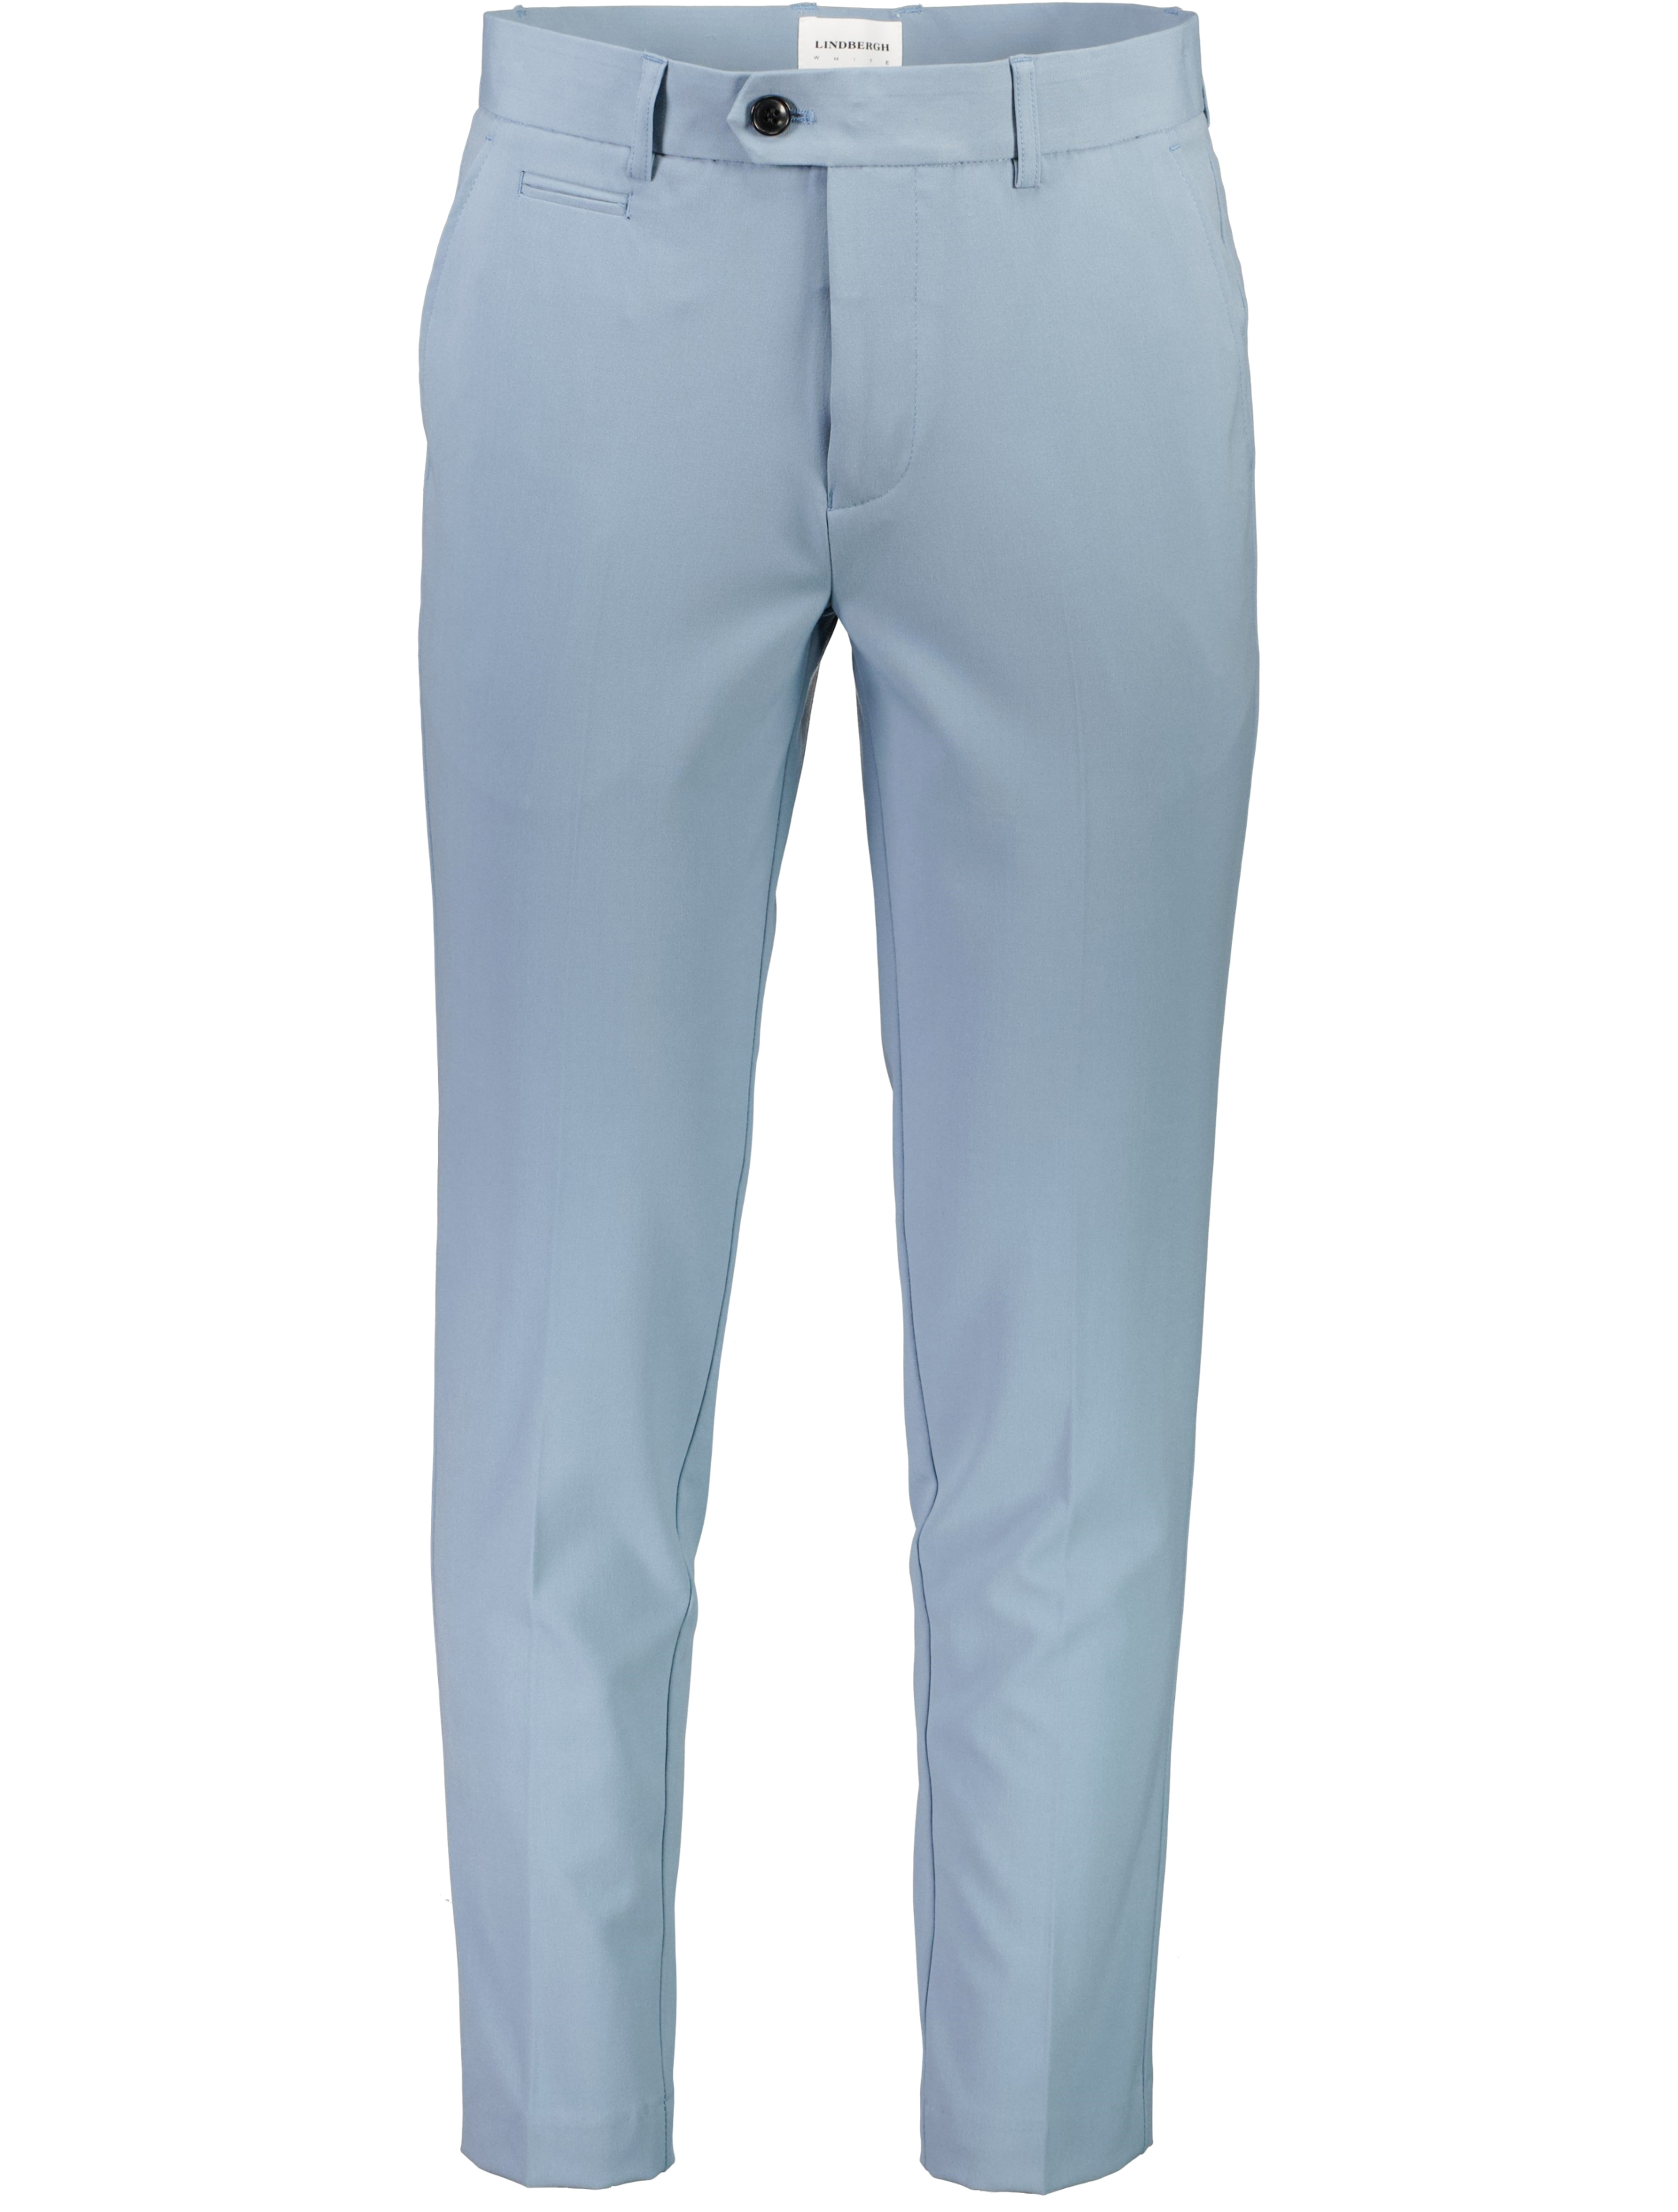 Lindbergh Performance pants blue / dusty blue mel